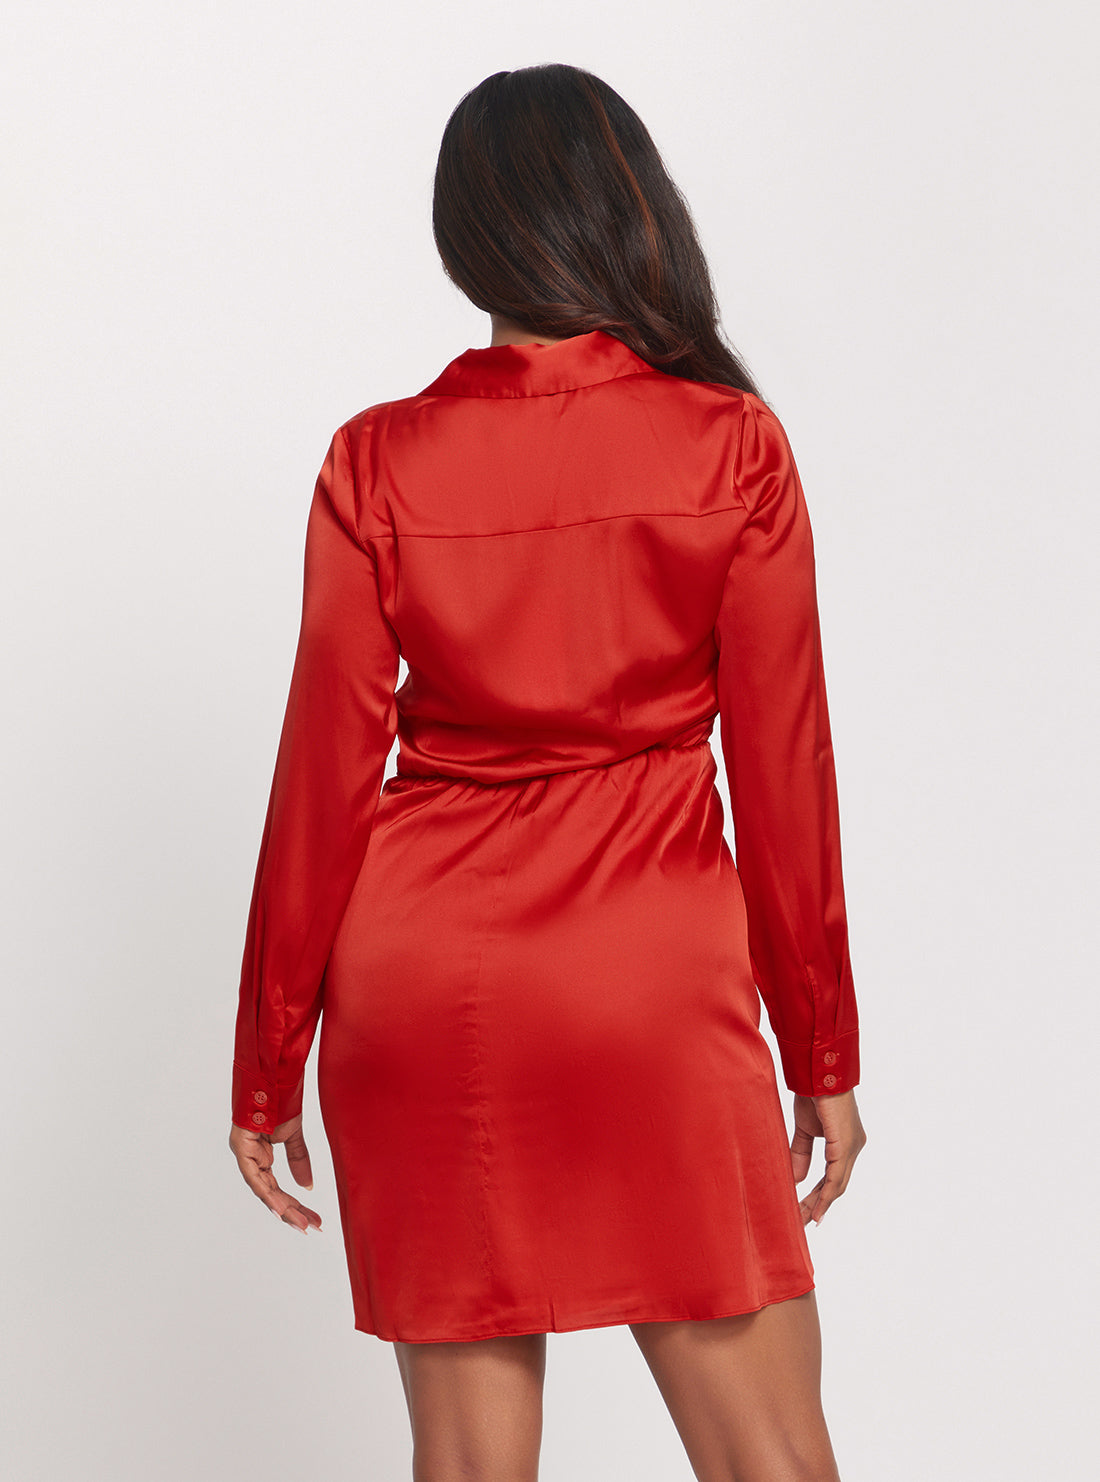 Bight Red Alya Dress